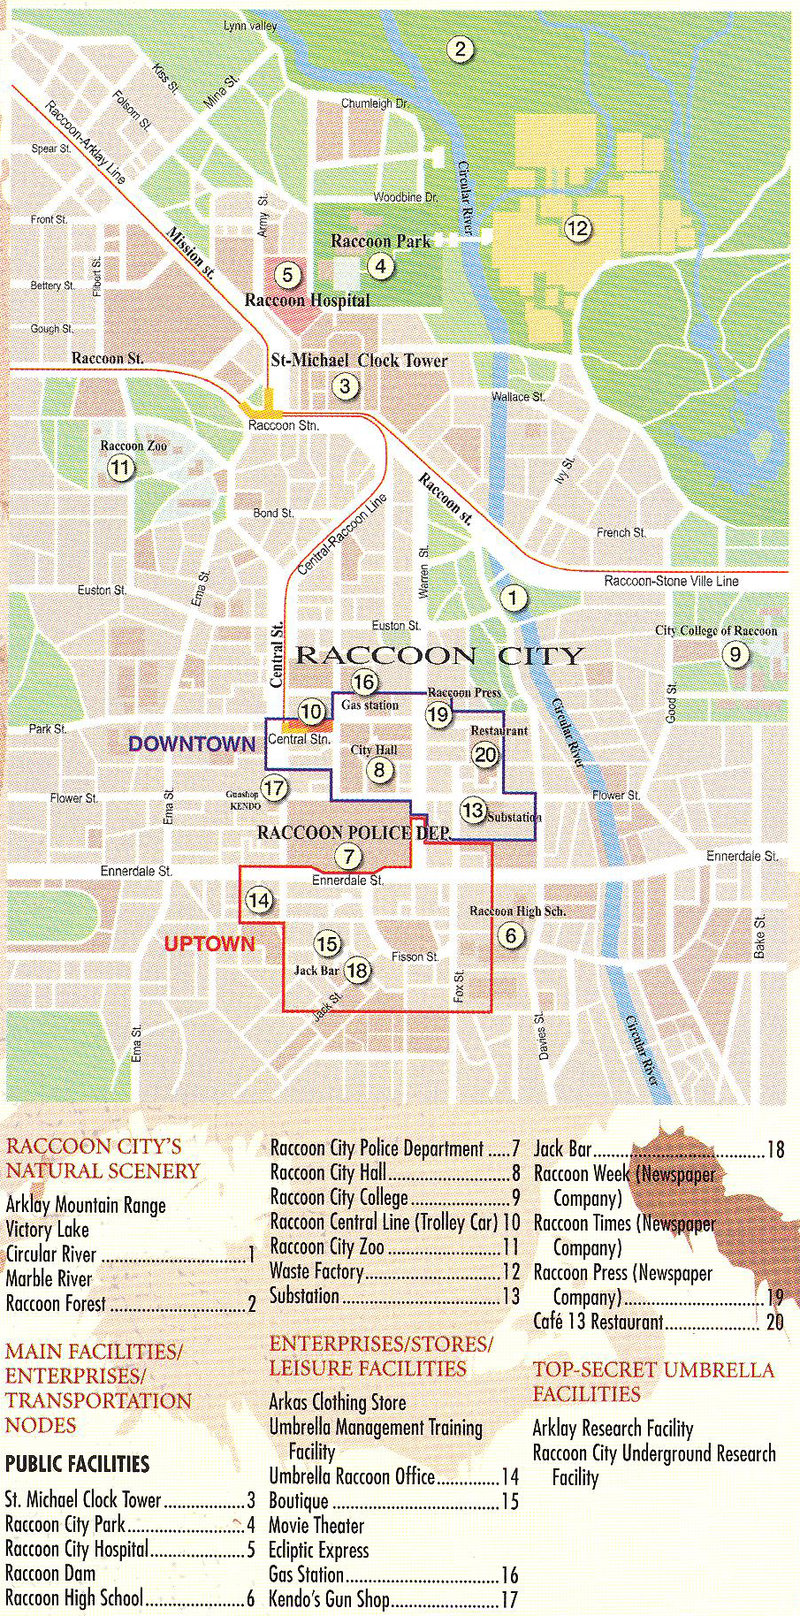 4pf_raccoon_city_map_by_zaidtomo.jpg